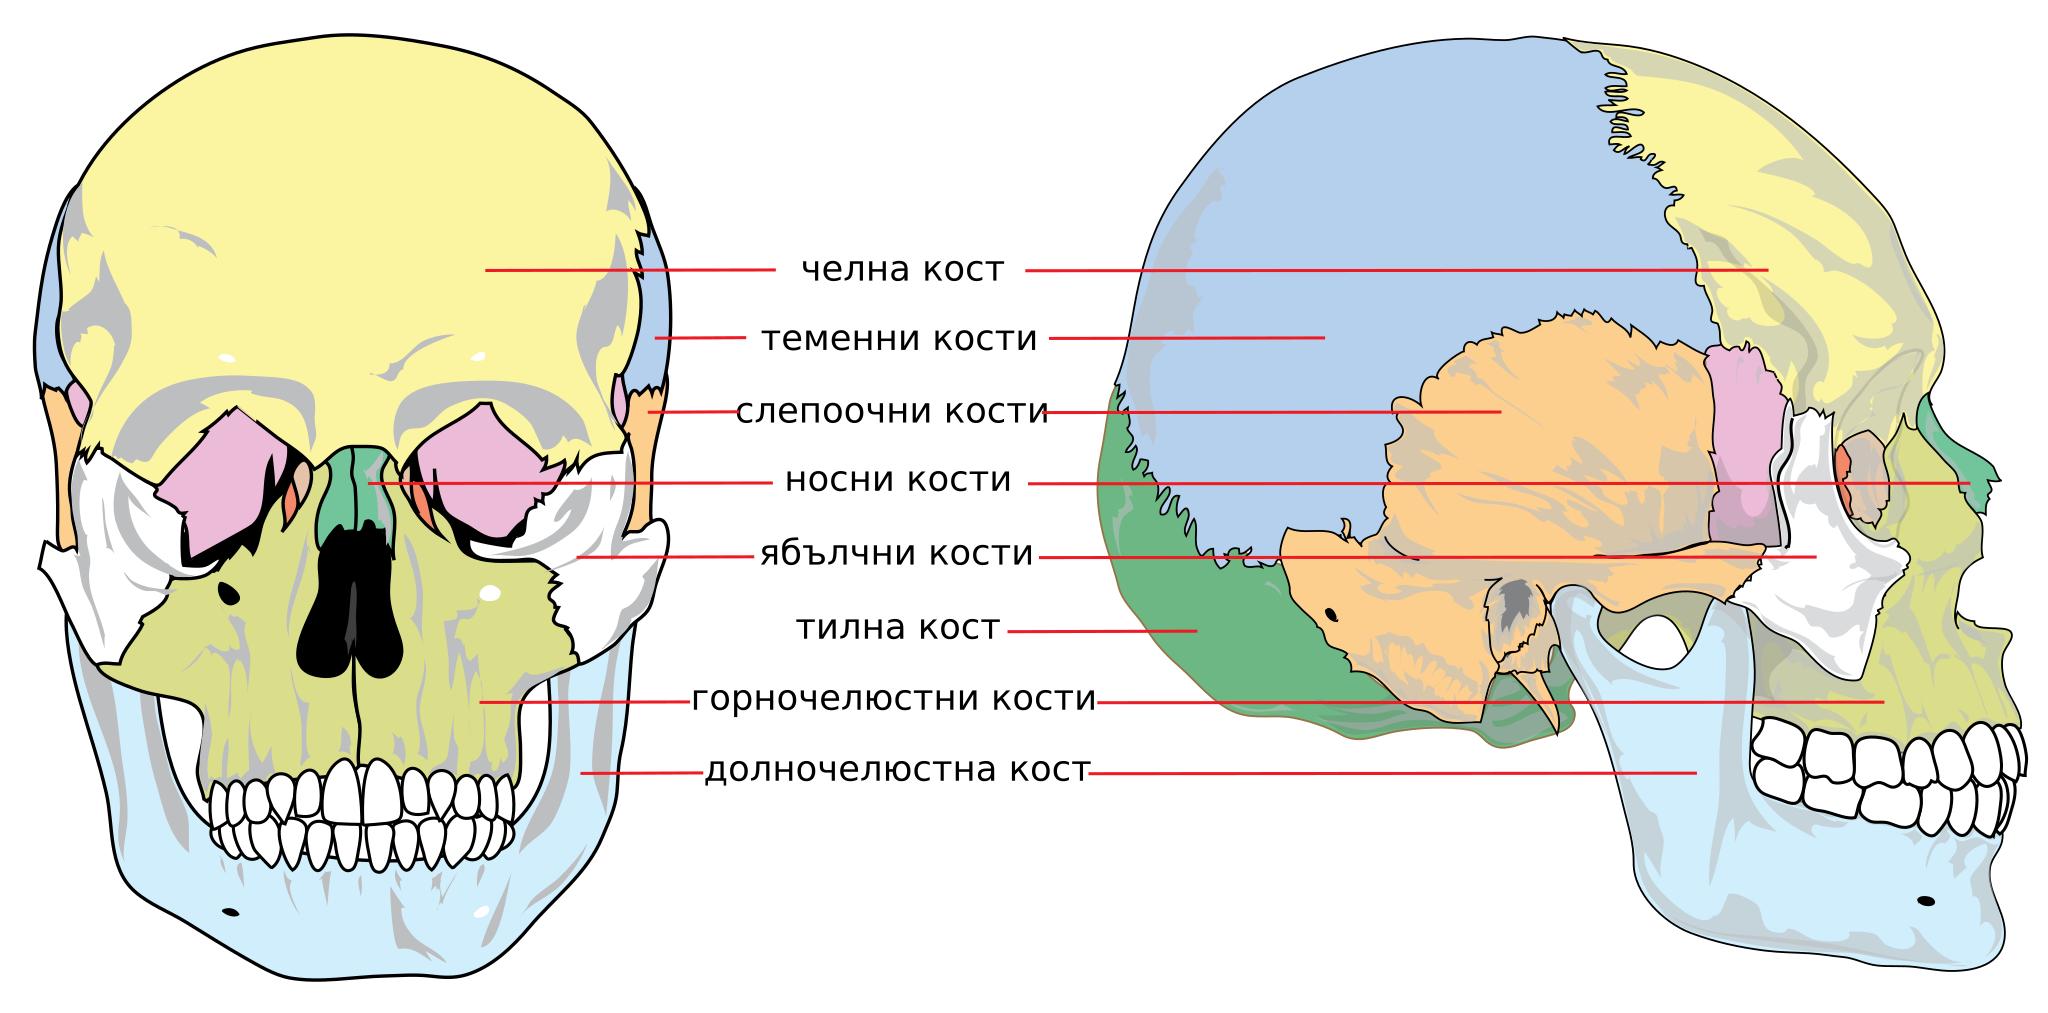 Кости мозгового черепа анатомия